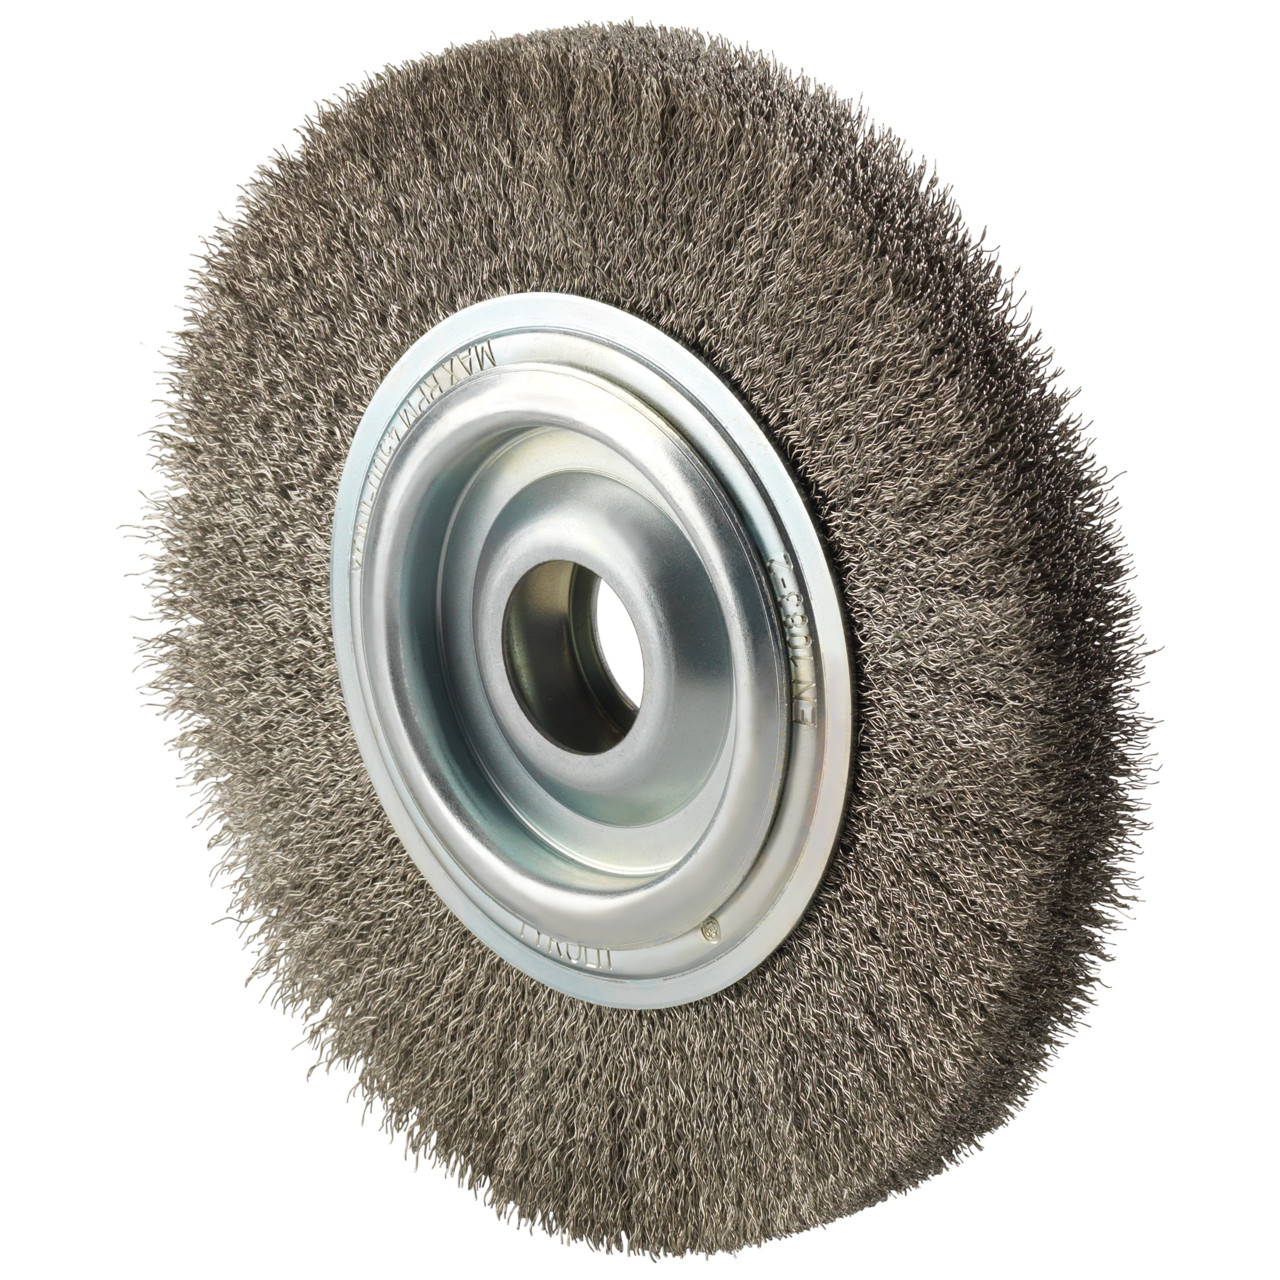 Spazzole rotonde Tyrolit DxLxH 100x20x24x20 Per acciaio inox, forma: 1RDW - (spazzole rotonde), Art. 896110